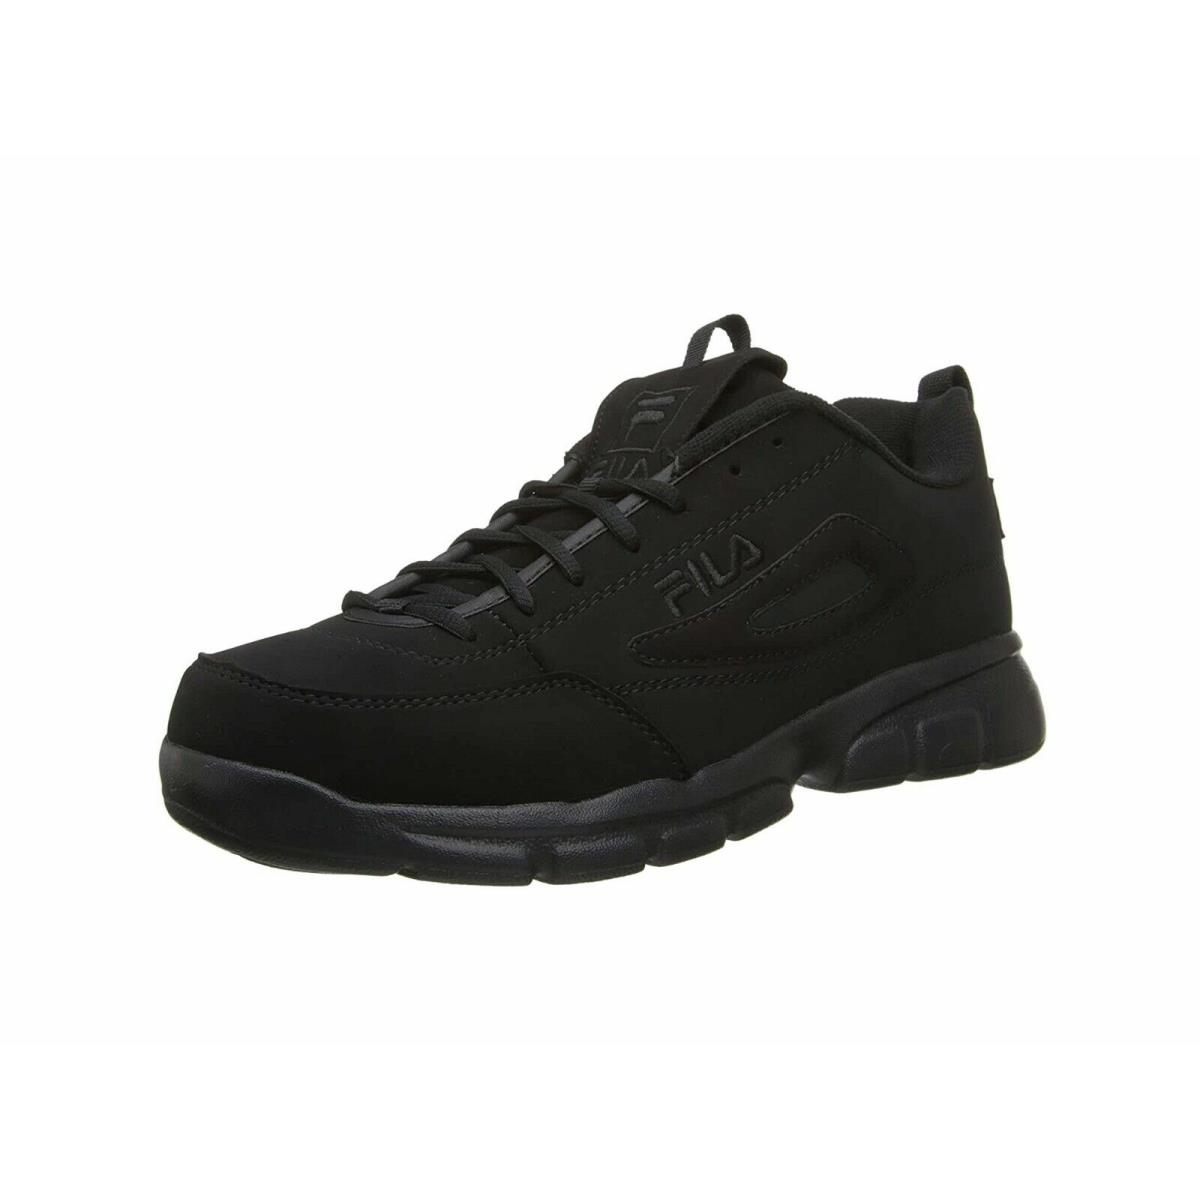 Fila Disruptor SE Men Shoes Nubuck Black Black Sneakers - Black